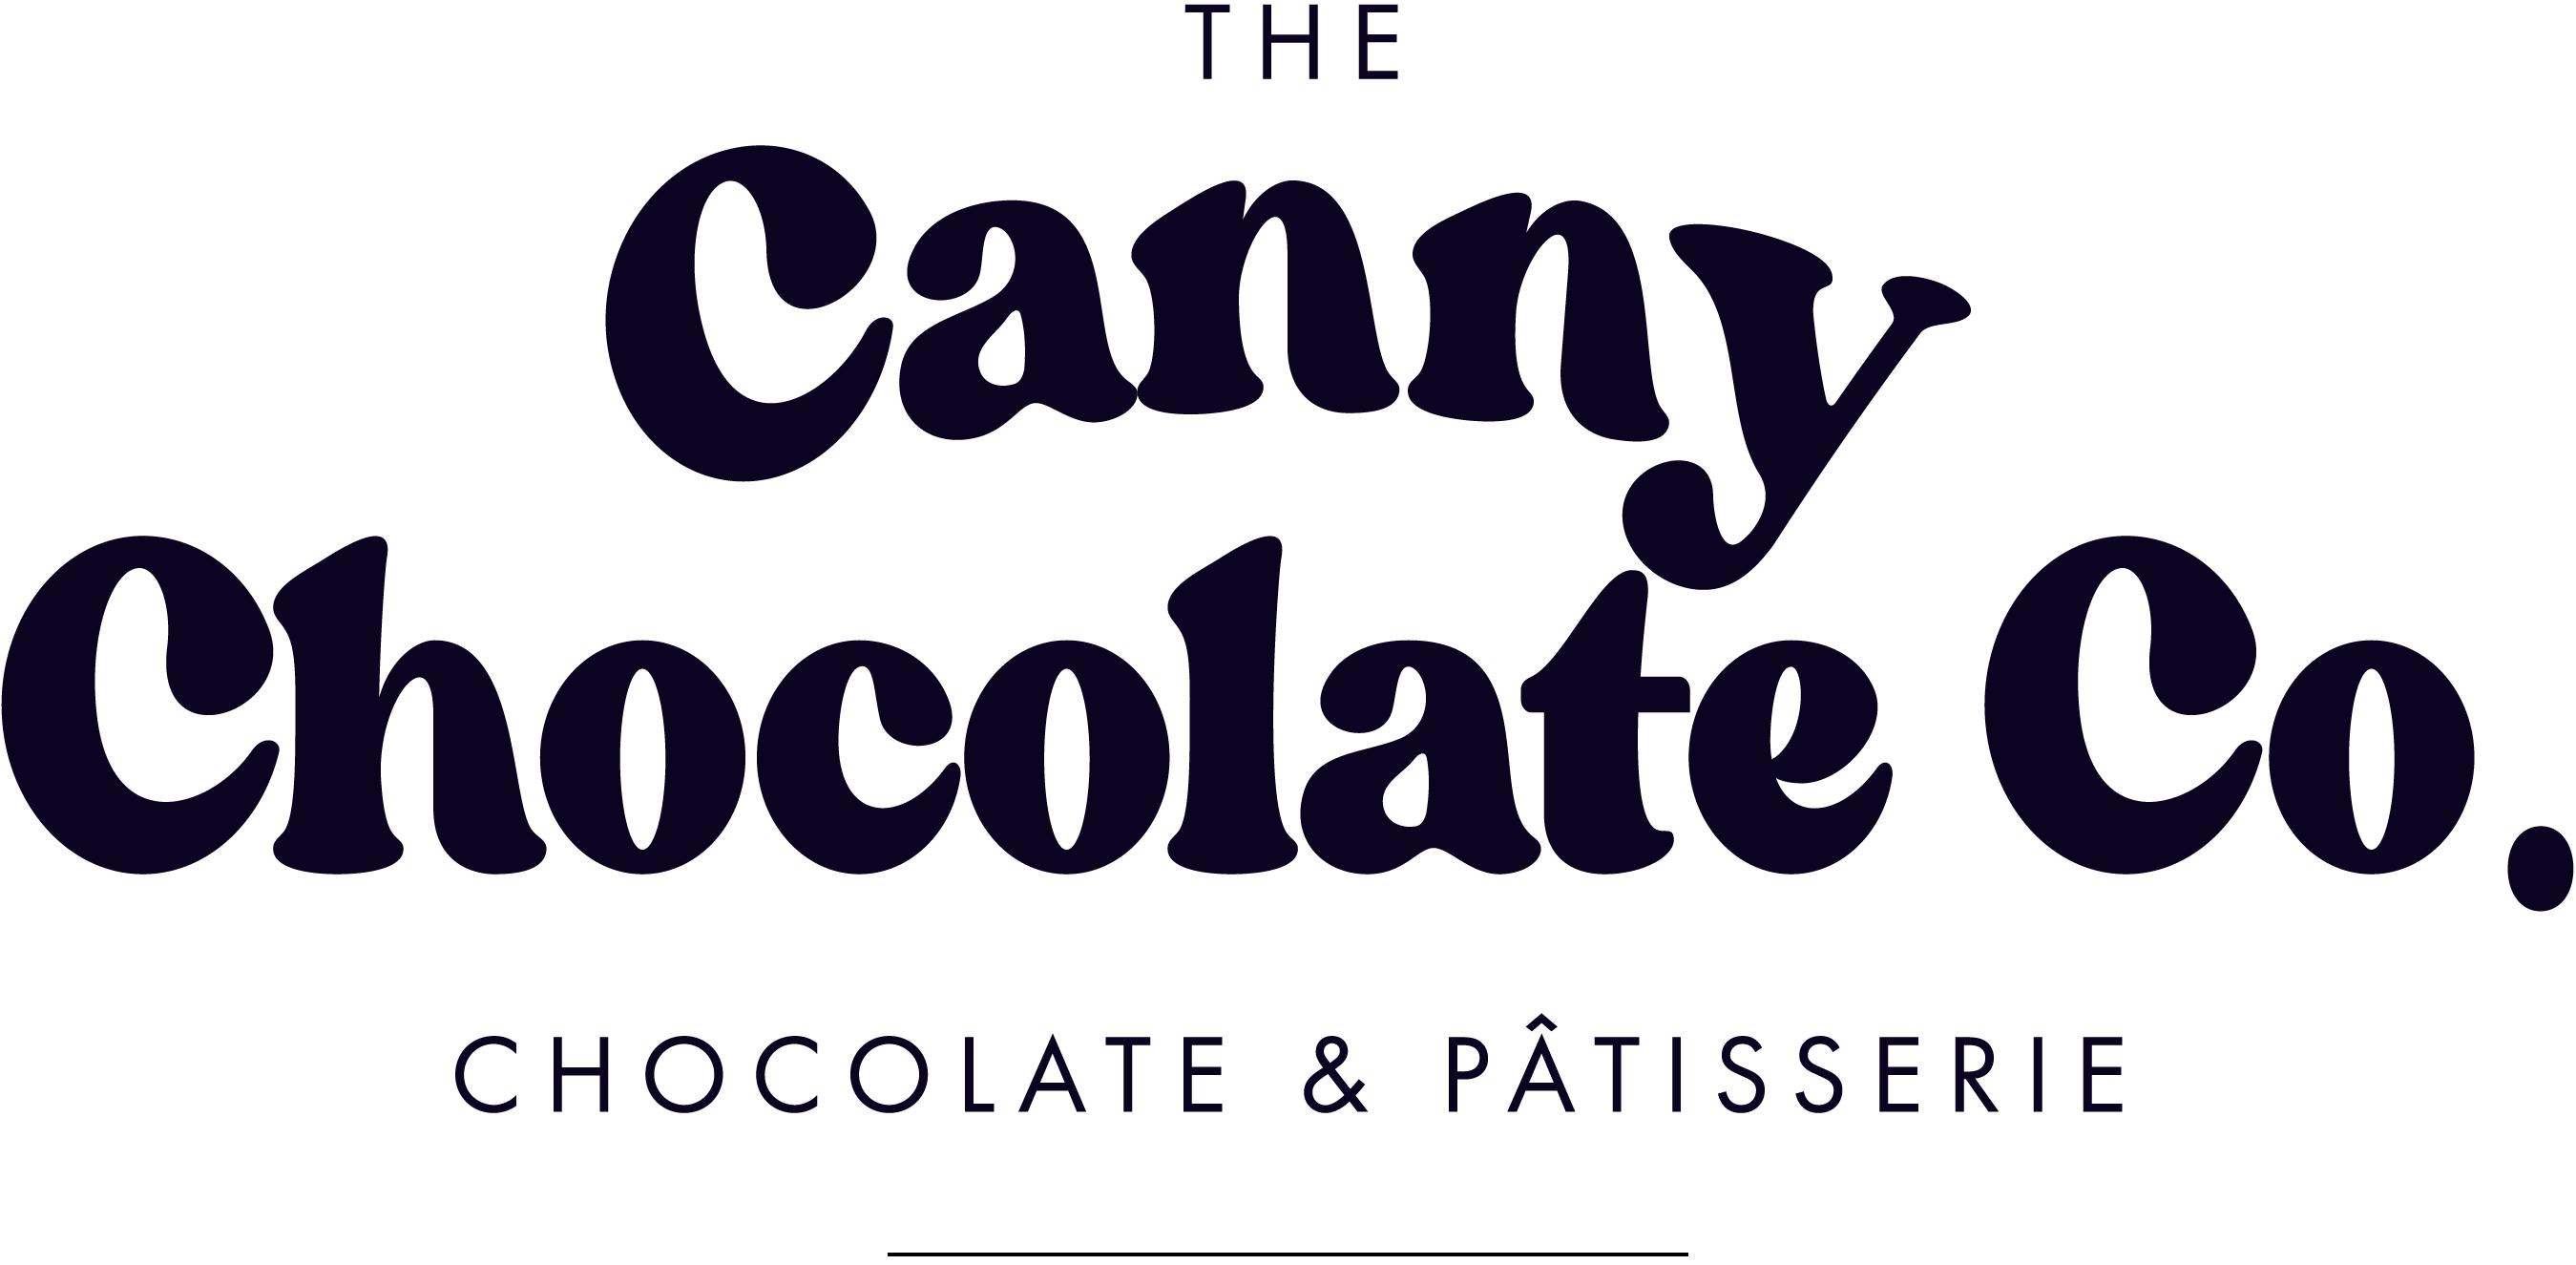 The Canny Chocolate Company